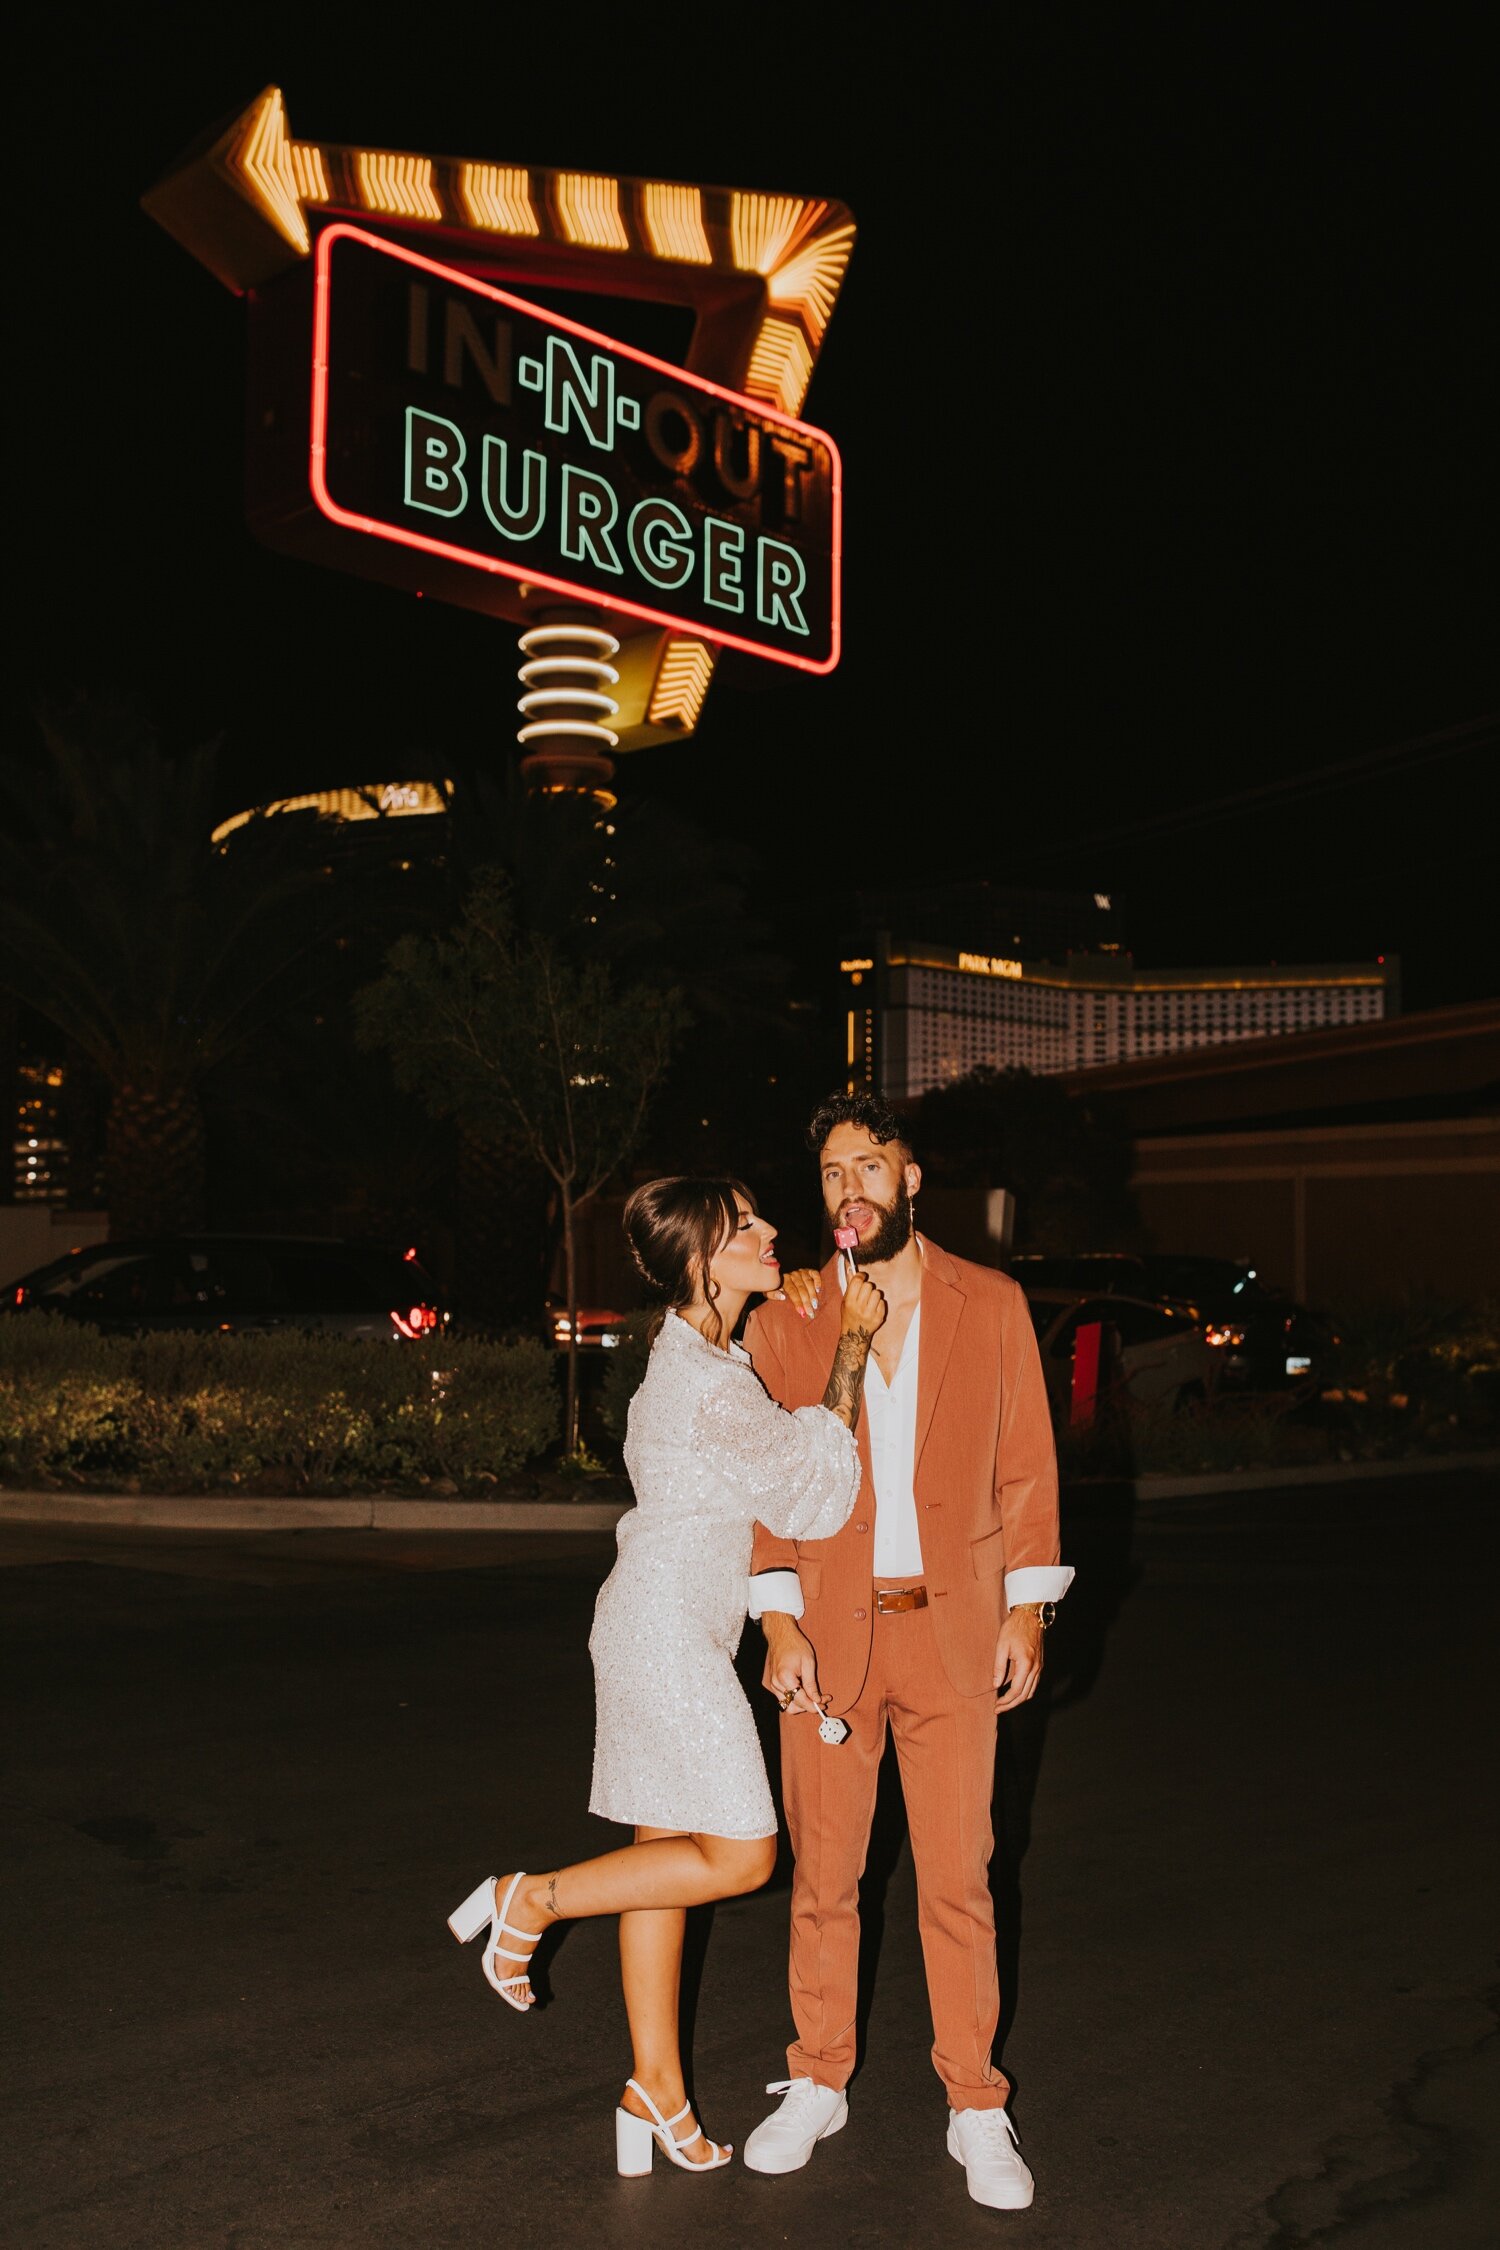 Las Vegas Elopement, The Flamingo Hotel, Las Vegas Wedding, Las Vegas Wedding Photographer, Destination Wedding Photographer, Hudson Valley Wedding Photographer, In-n-out wedding